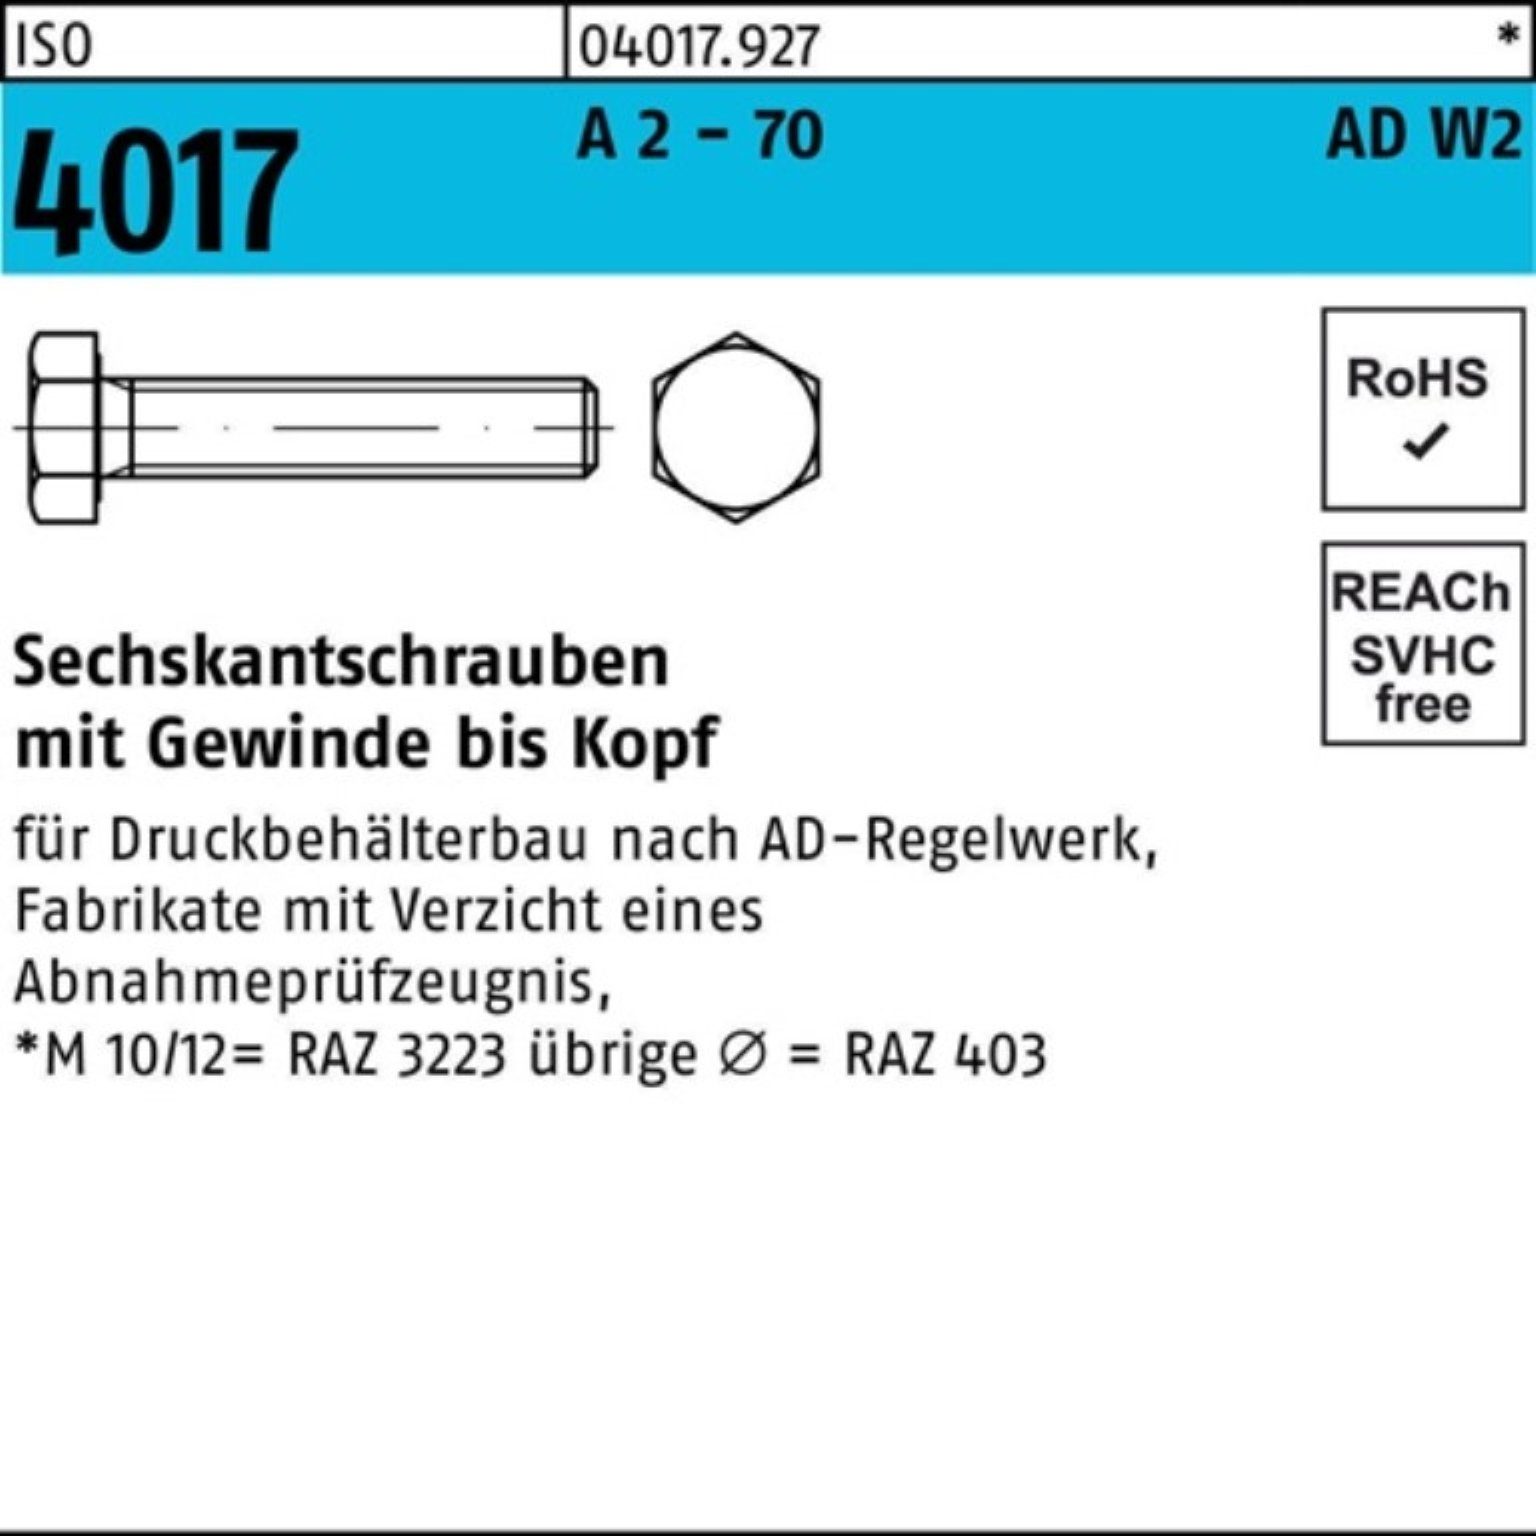 Bufab Sechskantschraube 100er Pack Sechskantschraube ISO 4017 VG M20x 50 A 2 - 70 AD-W2 25 St